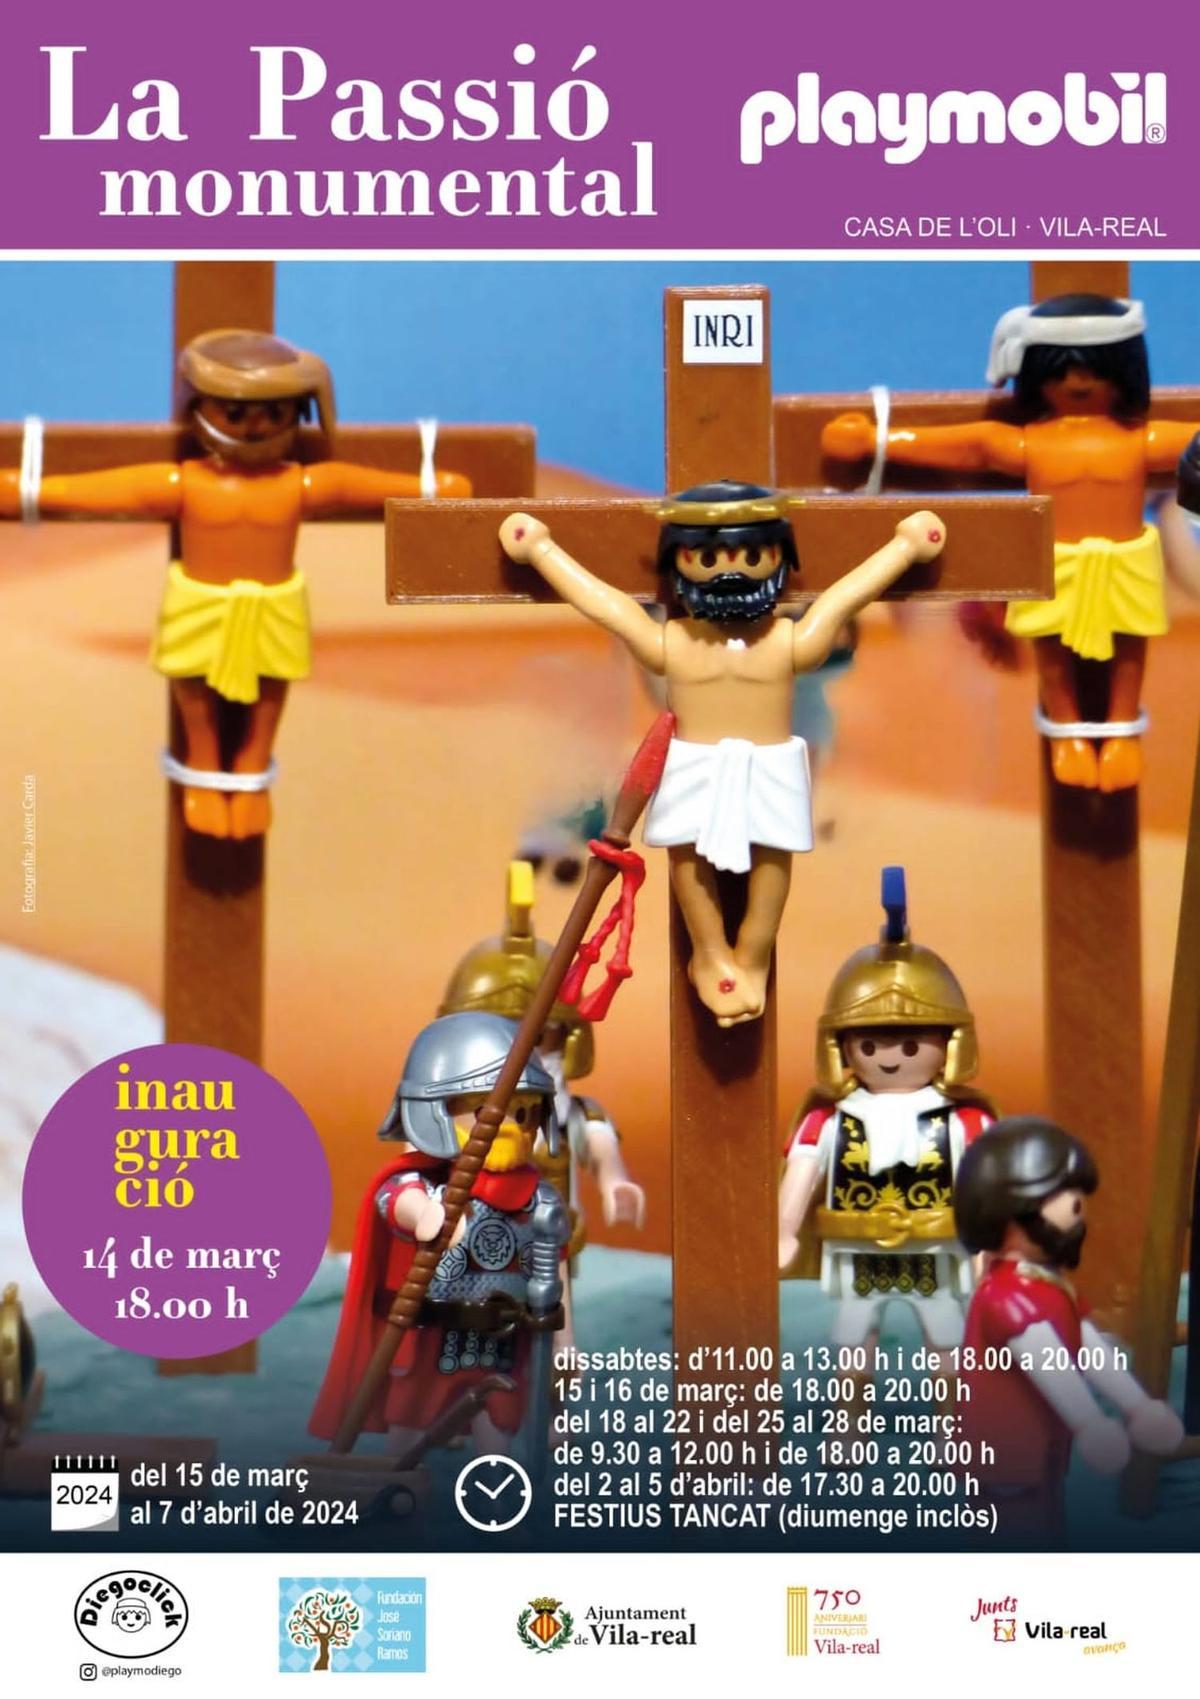 Imagen del cartel anunciador de la 'Passió monumental Playmobil', del vila-realense Diego Pérez.